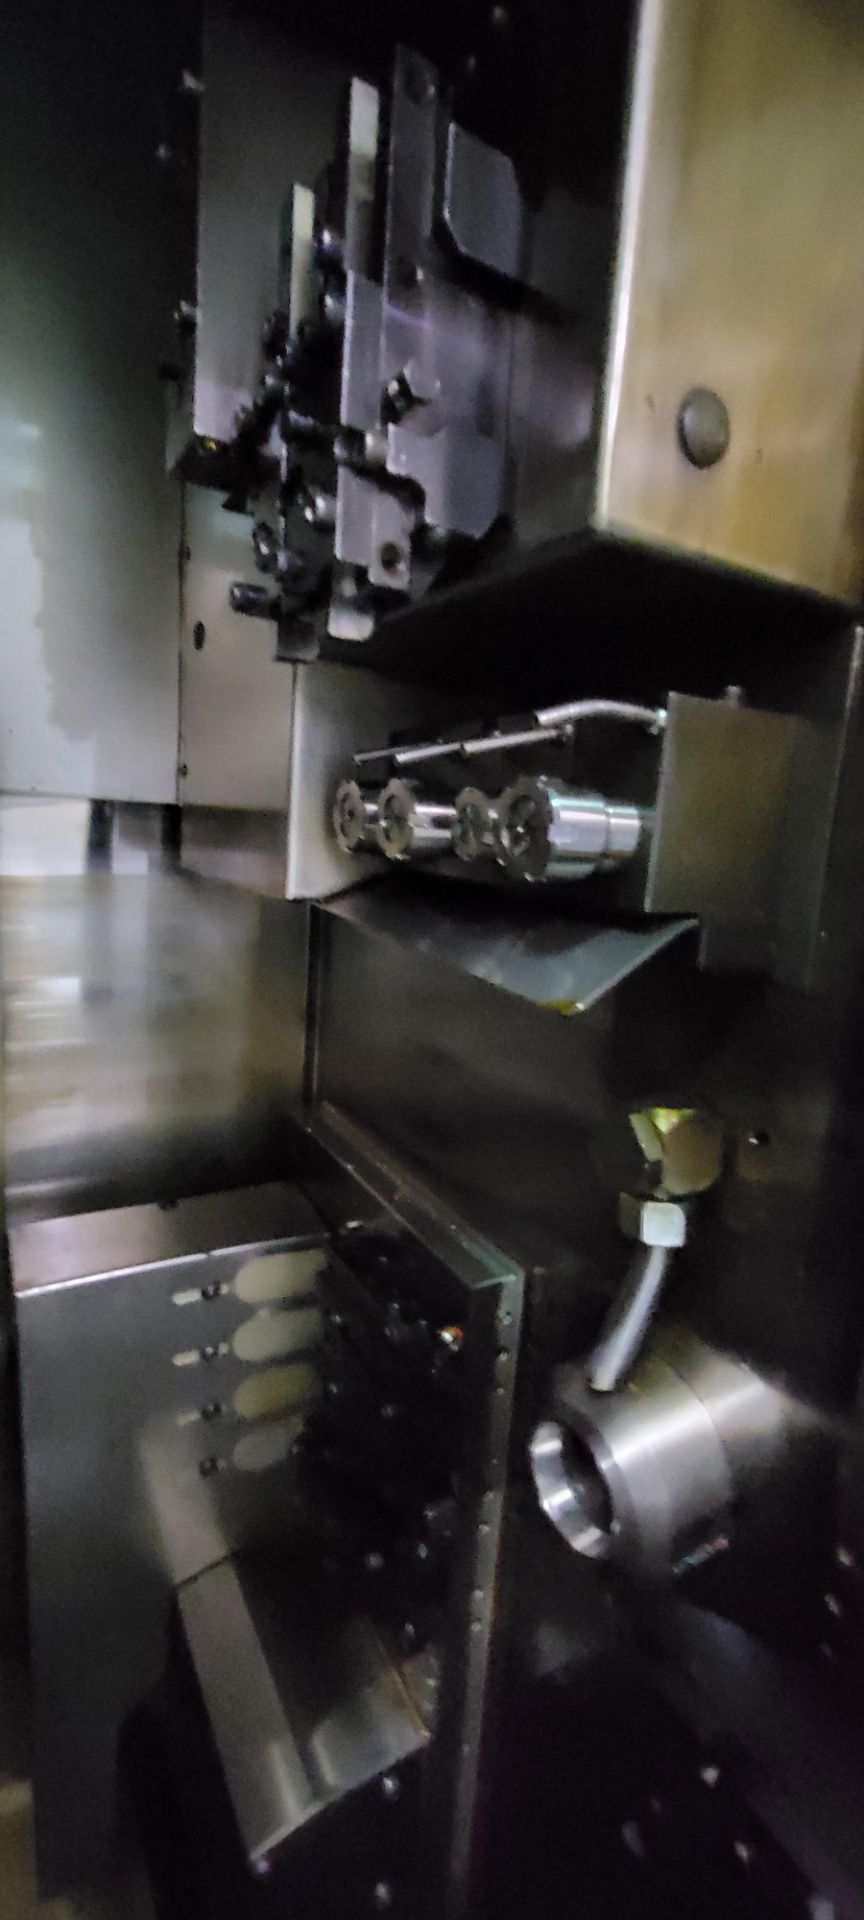 Tornos Bechler Deco 2000/26 10-Axis Sliding Headstock CNC Swiss-Type Screw Machine - Image 6 of 19